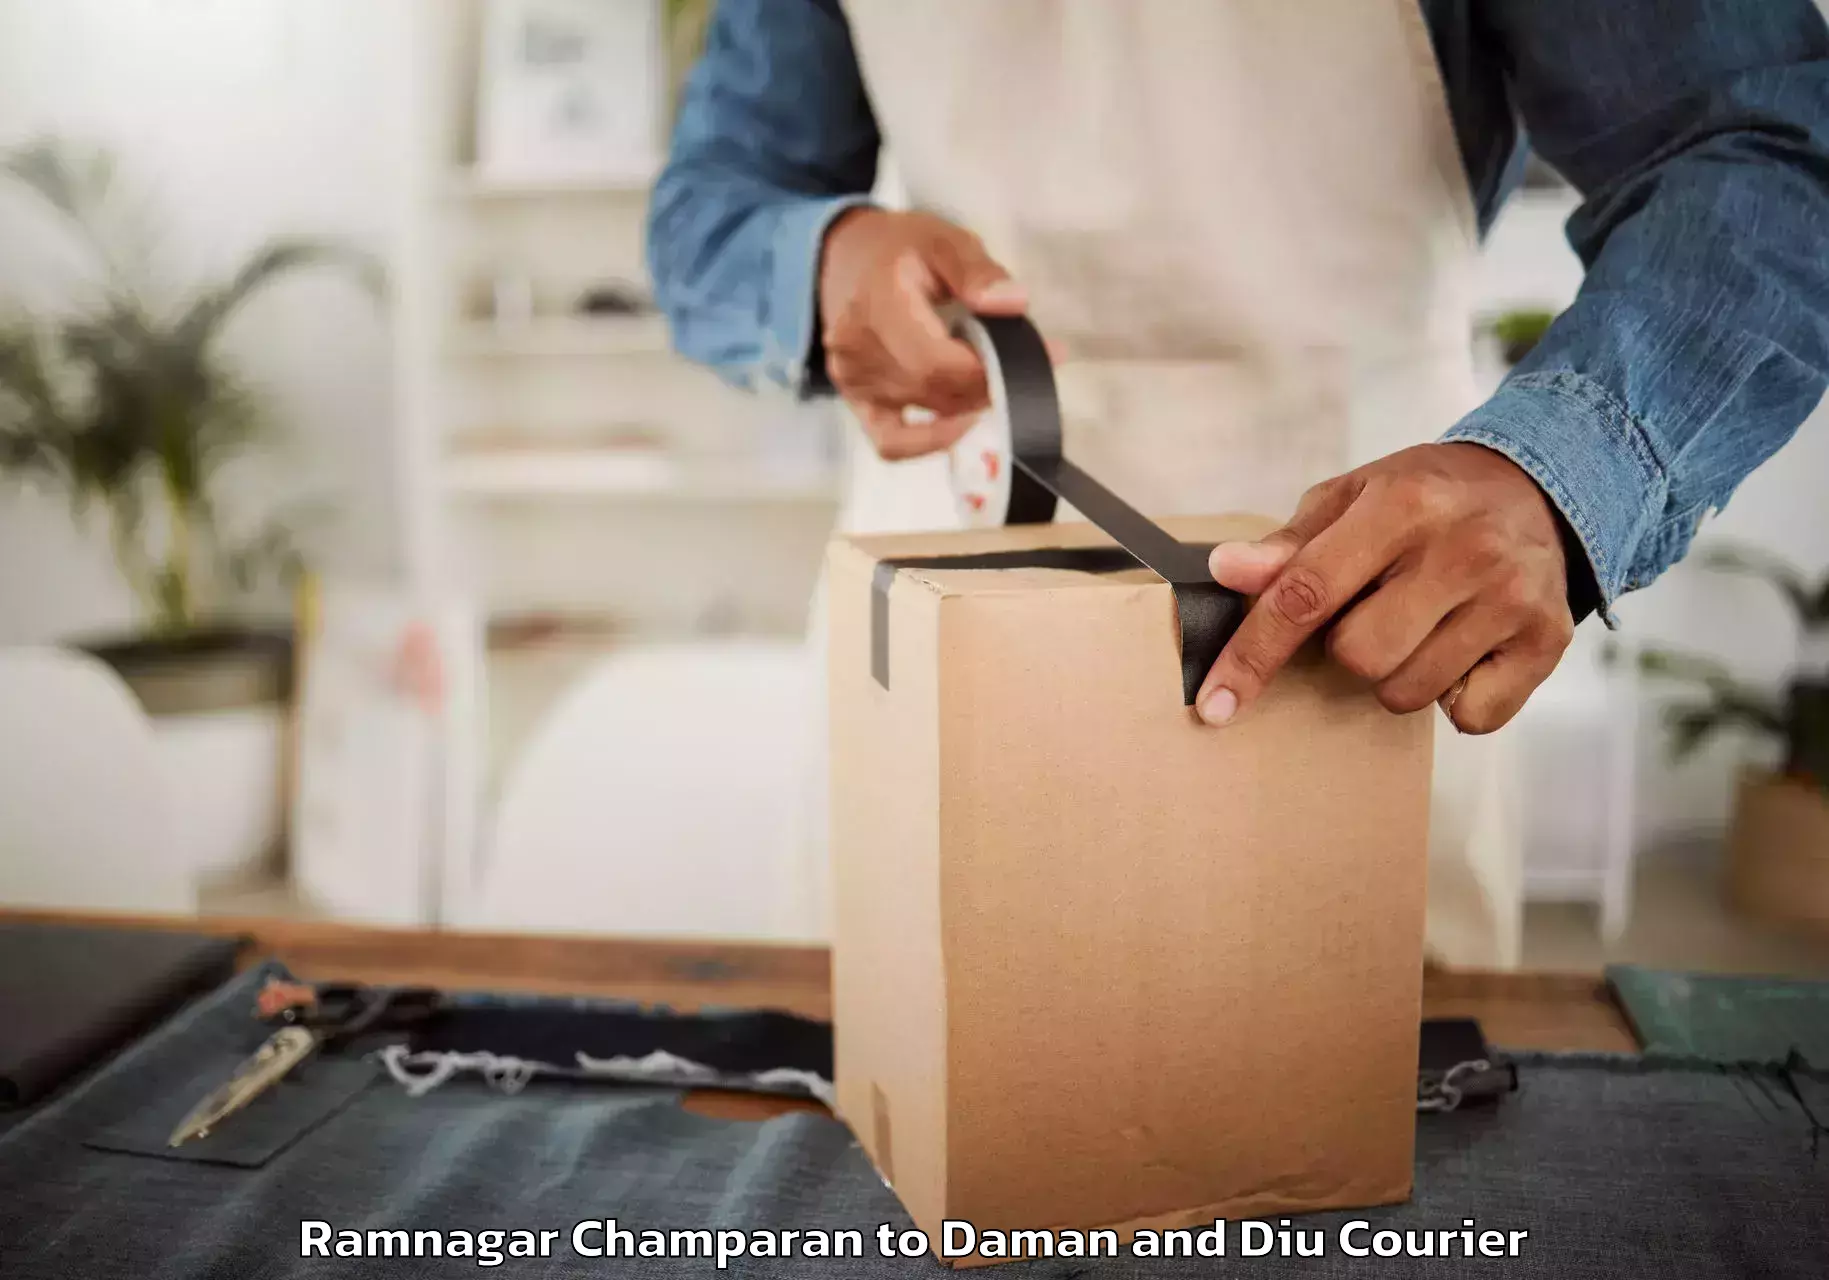 Furniture moving specialists Ramnagar Champaran to Daman and Diu